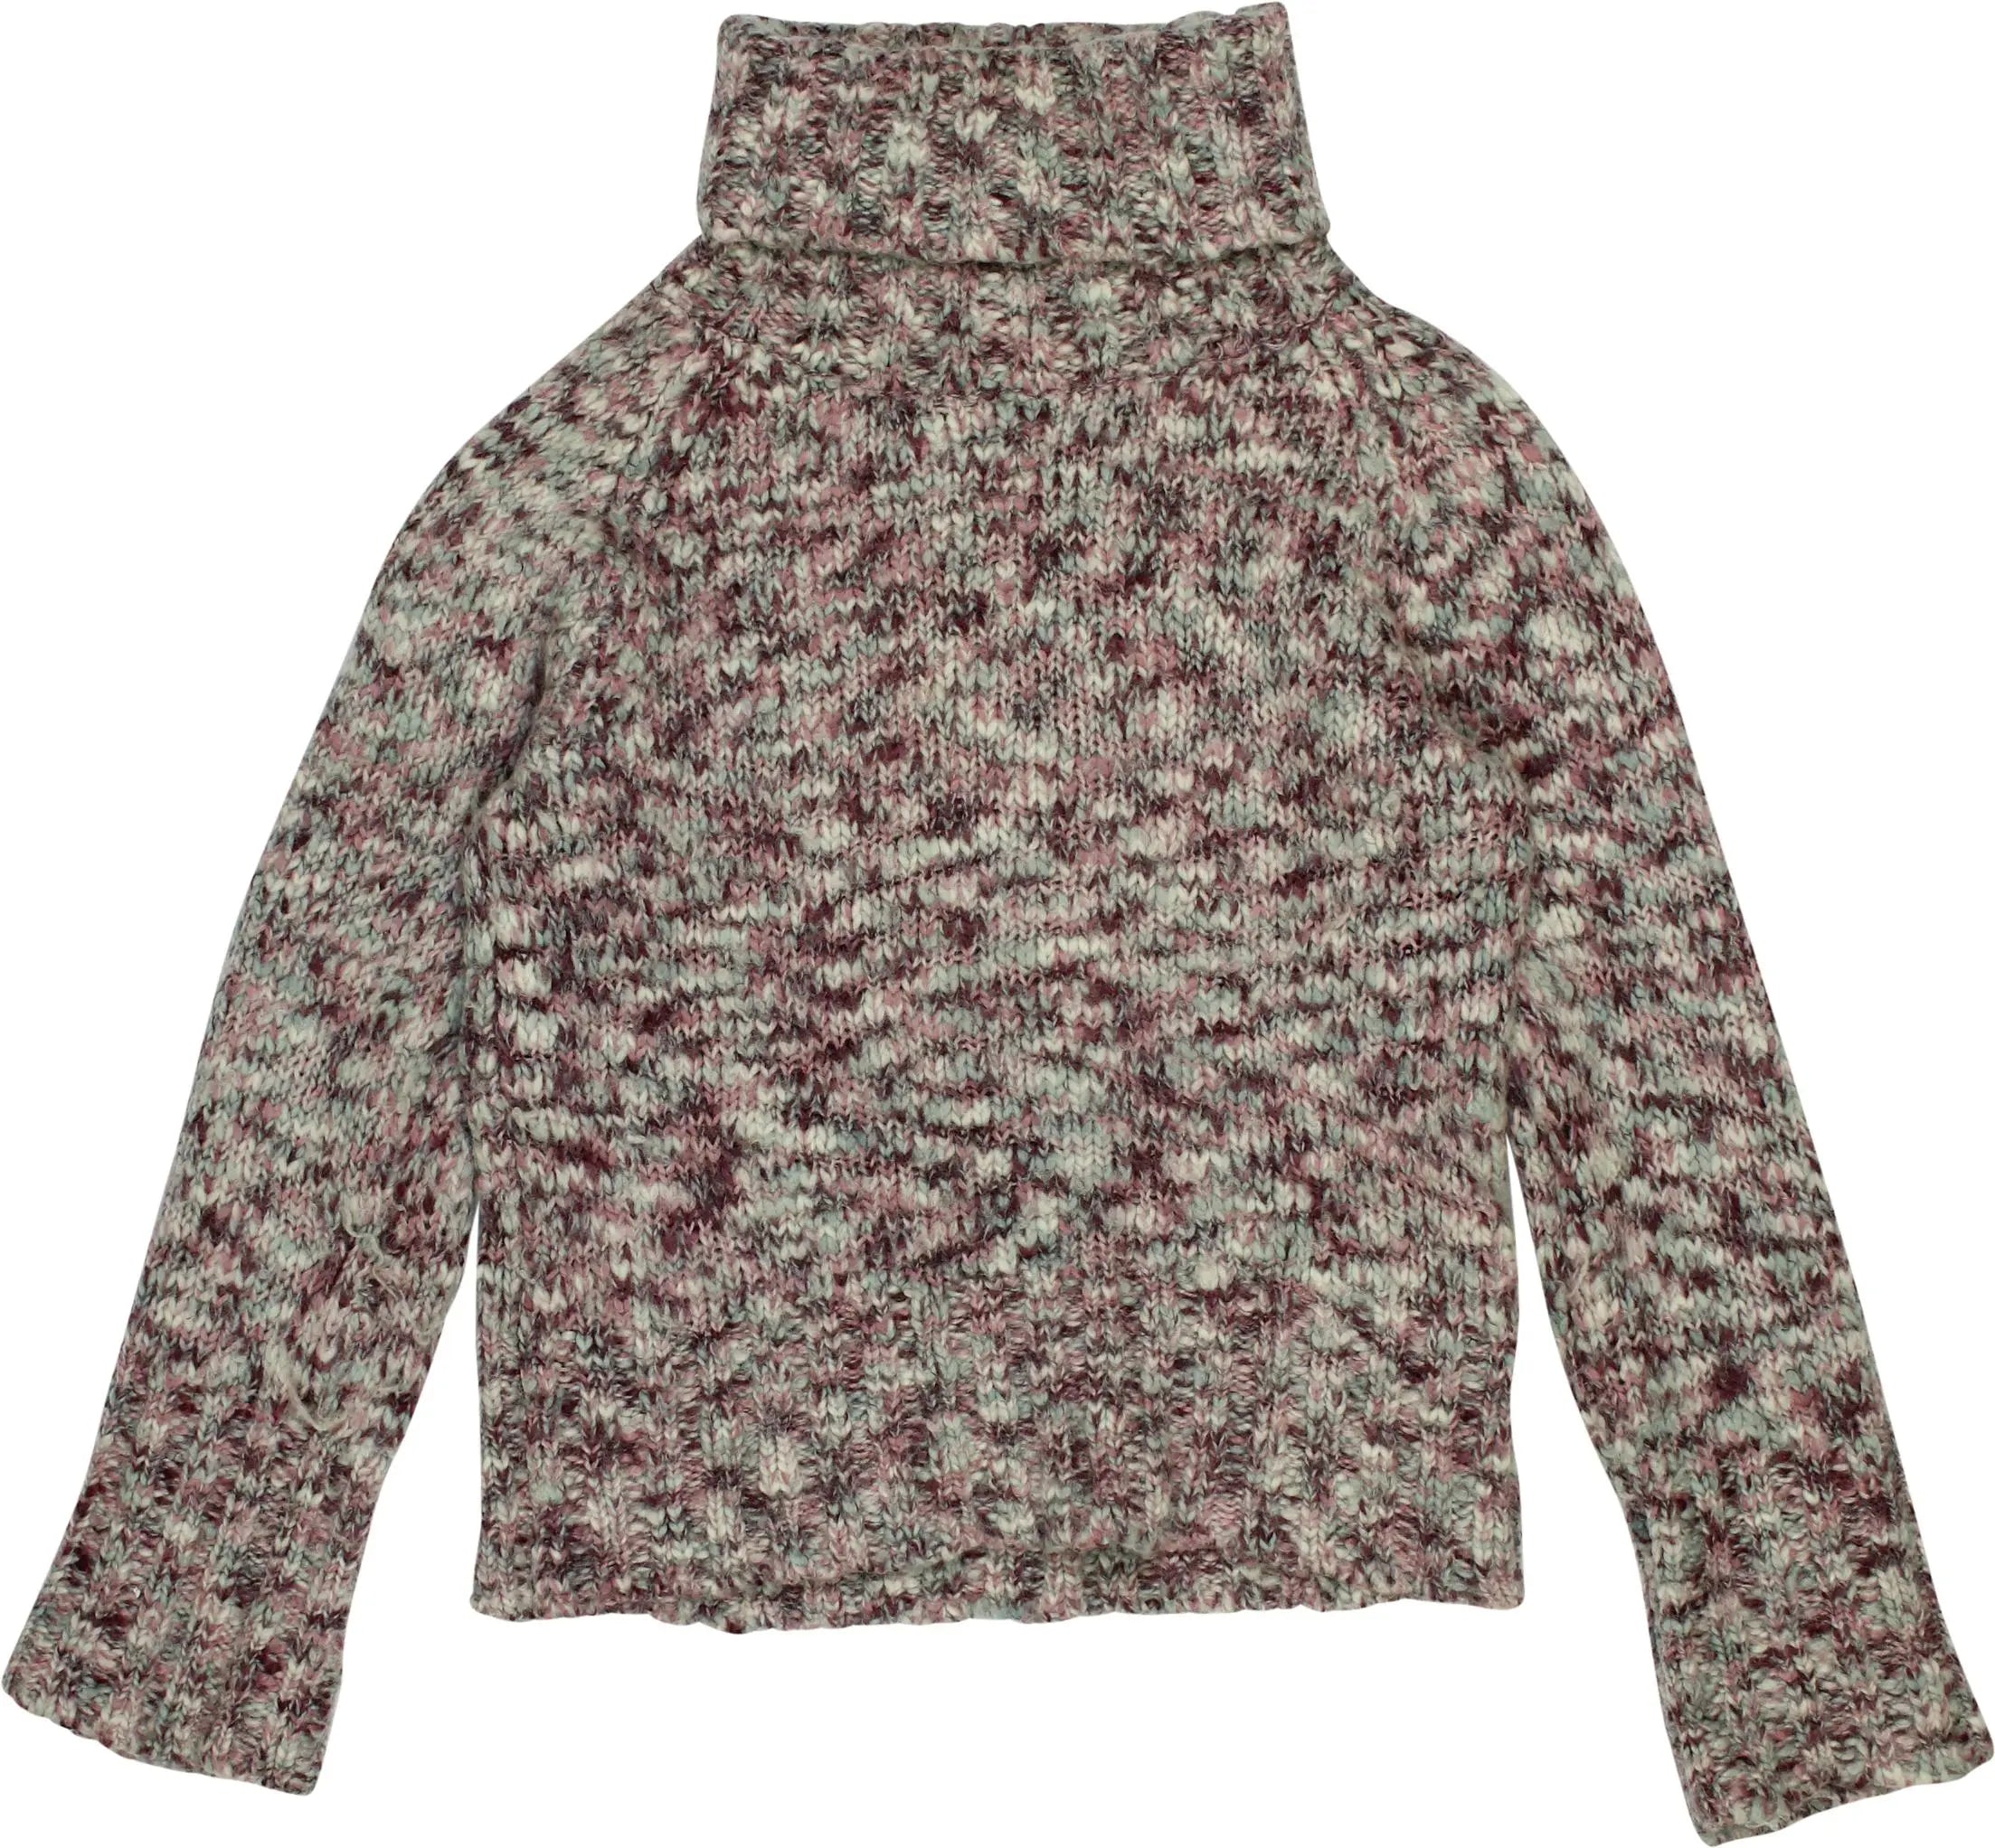 Bon A Parte - Wool Blend Turtleneck Jumper- ThriftTale.com - Vintage and second handclothing